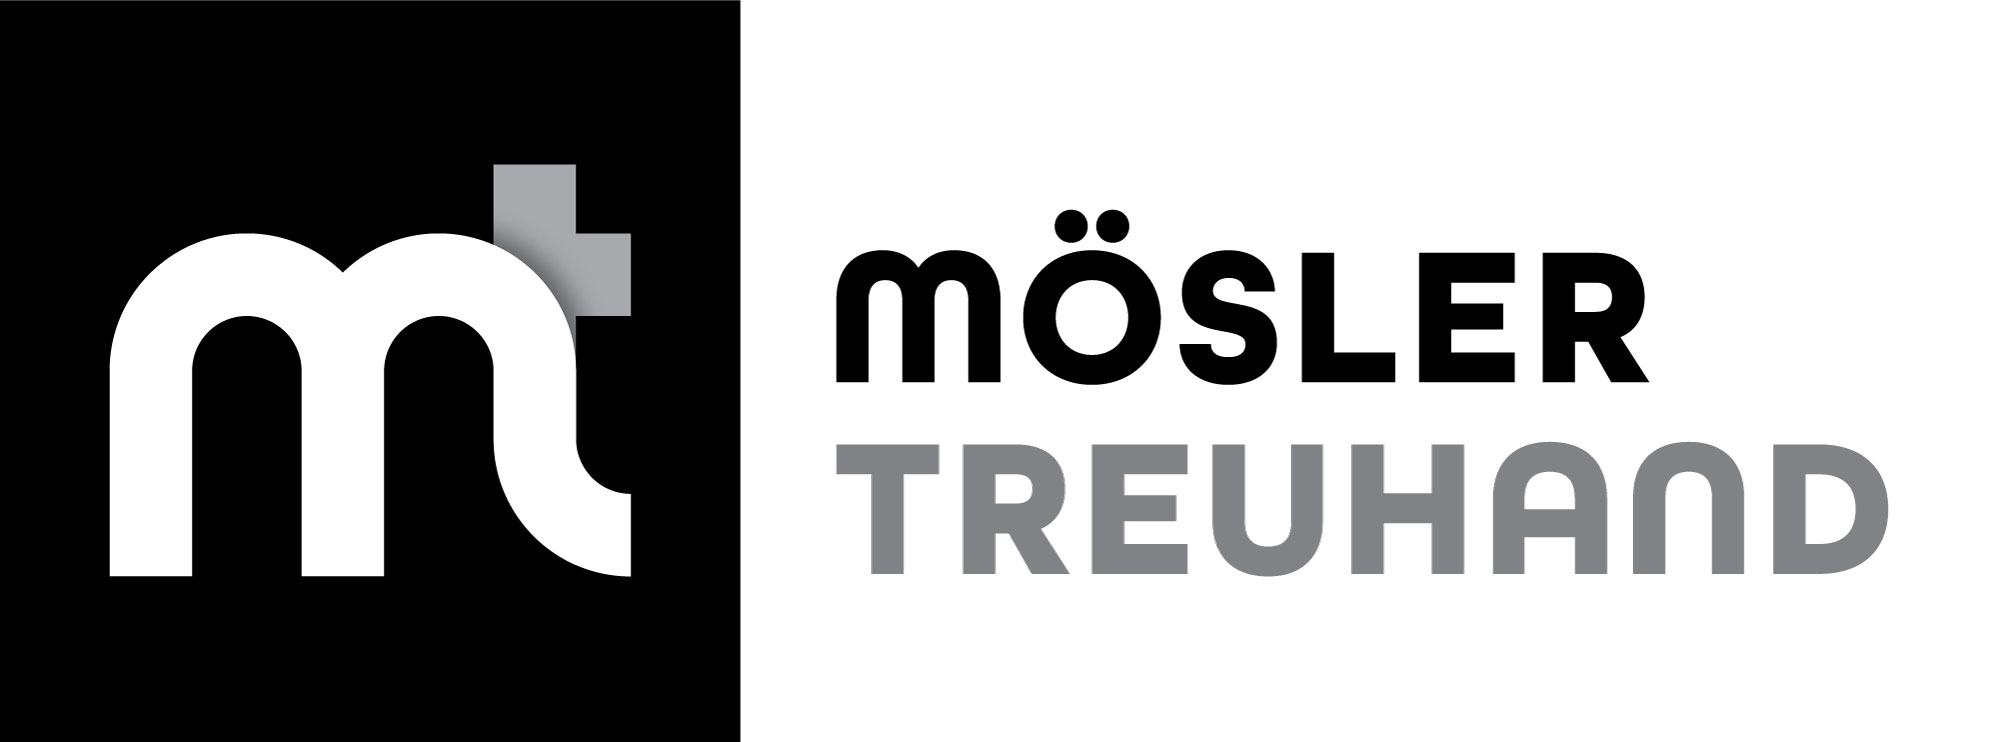 kulturstiftung thurgau logo kulturrausch bürglen studio bild rauschen